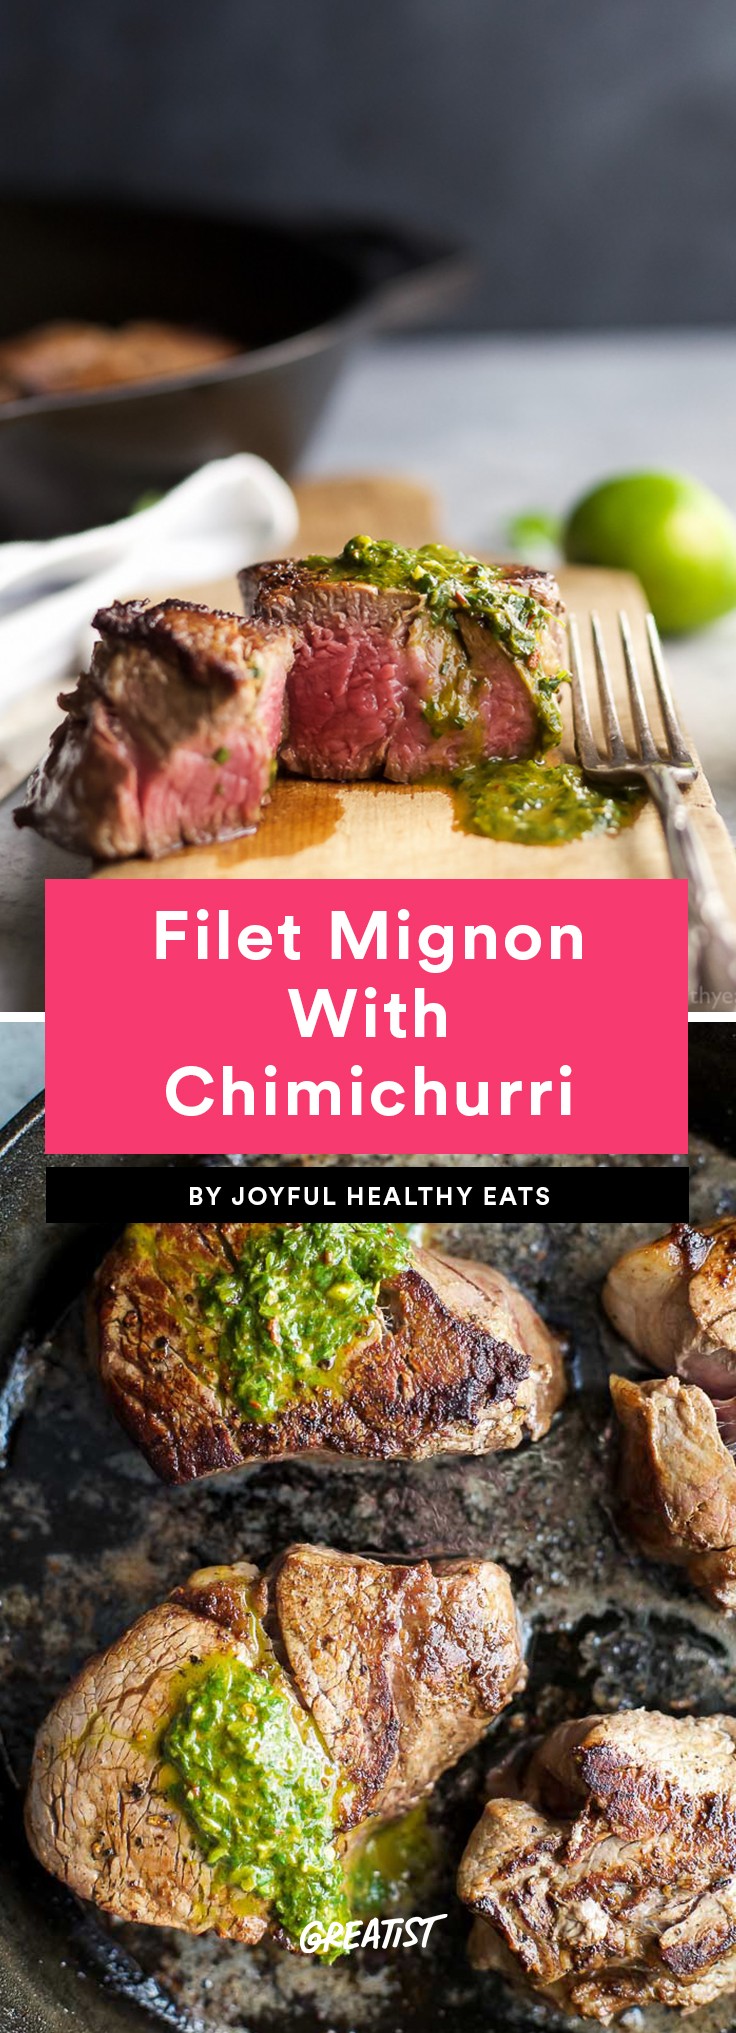 Filet Mignon With Chimichurri